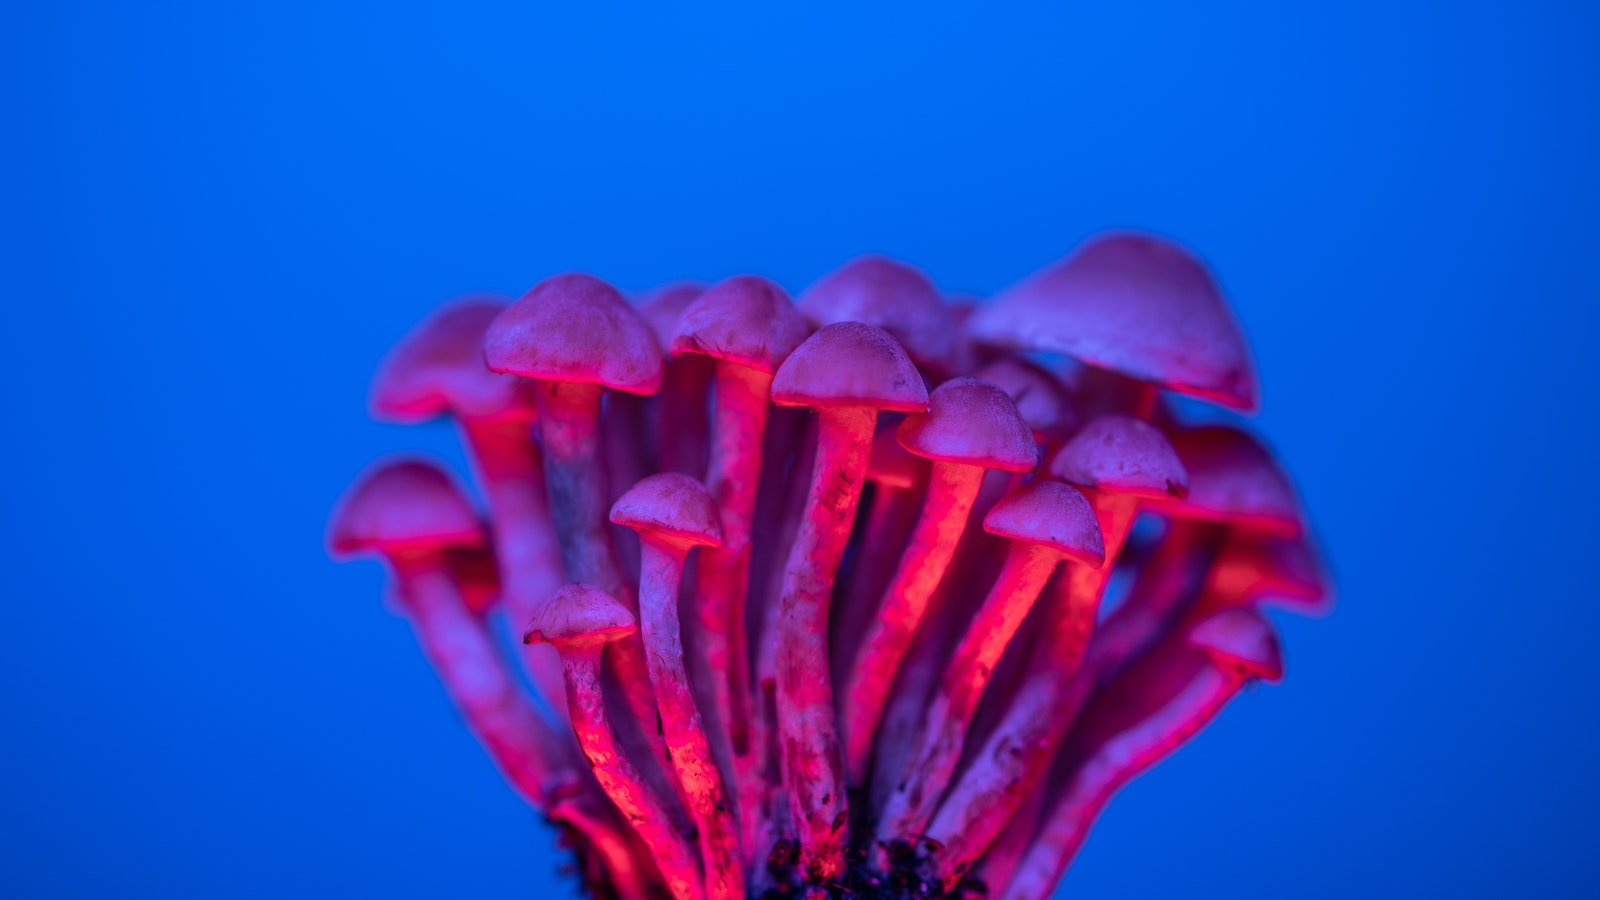 Macro Photography of a Psilocybin Mushroom